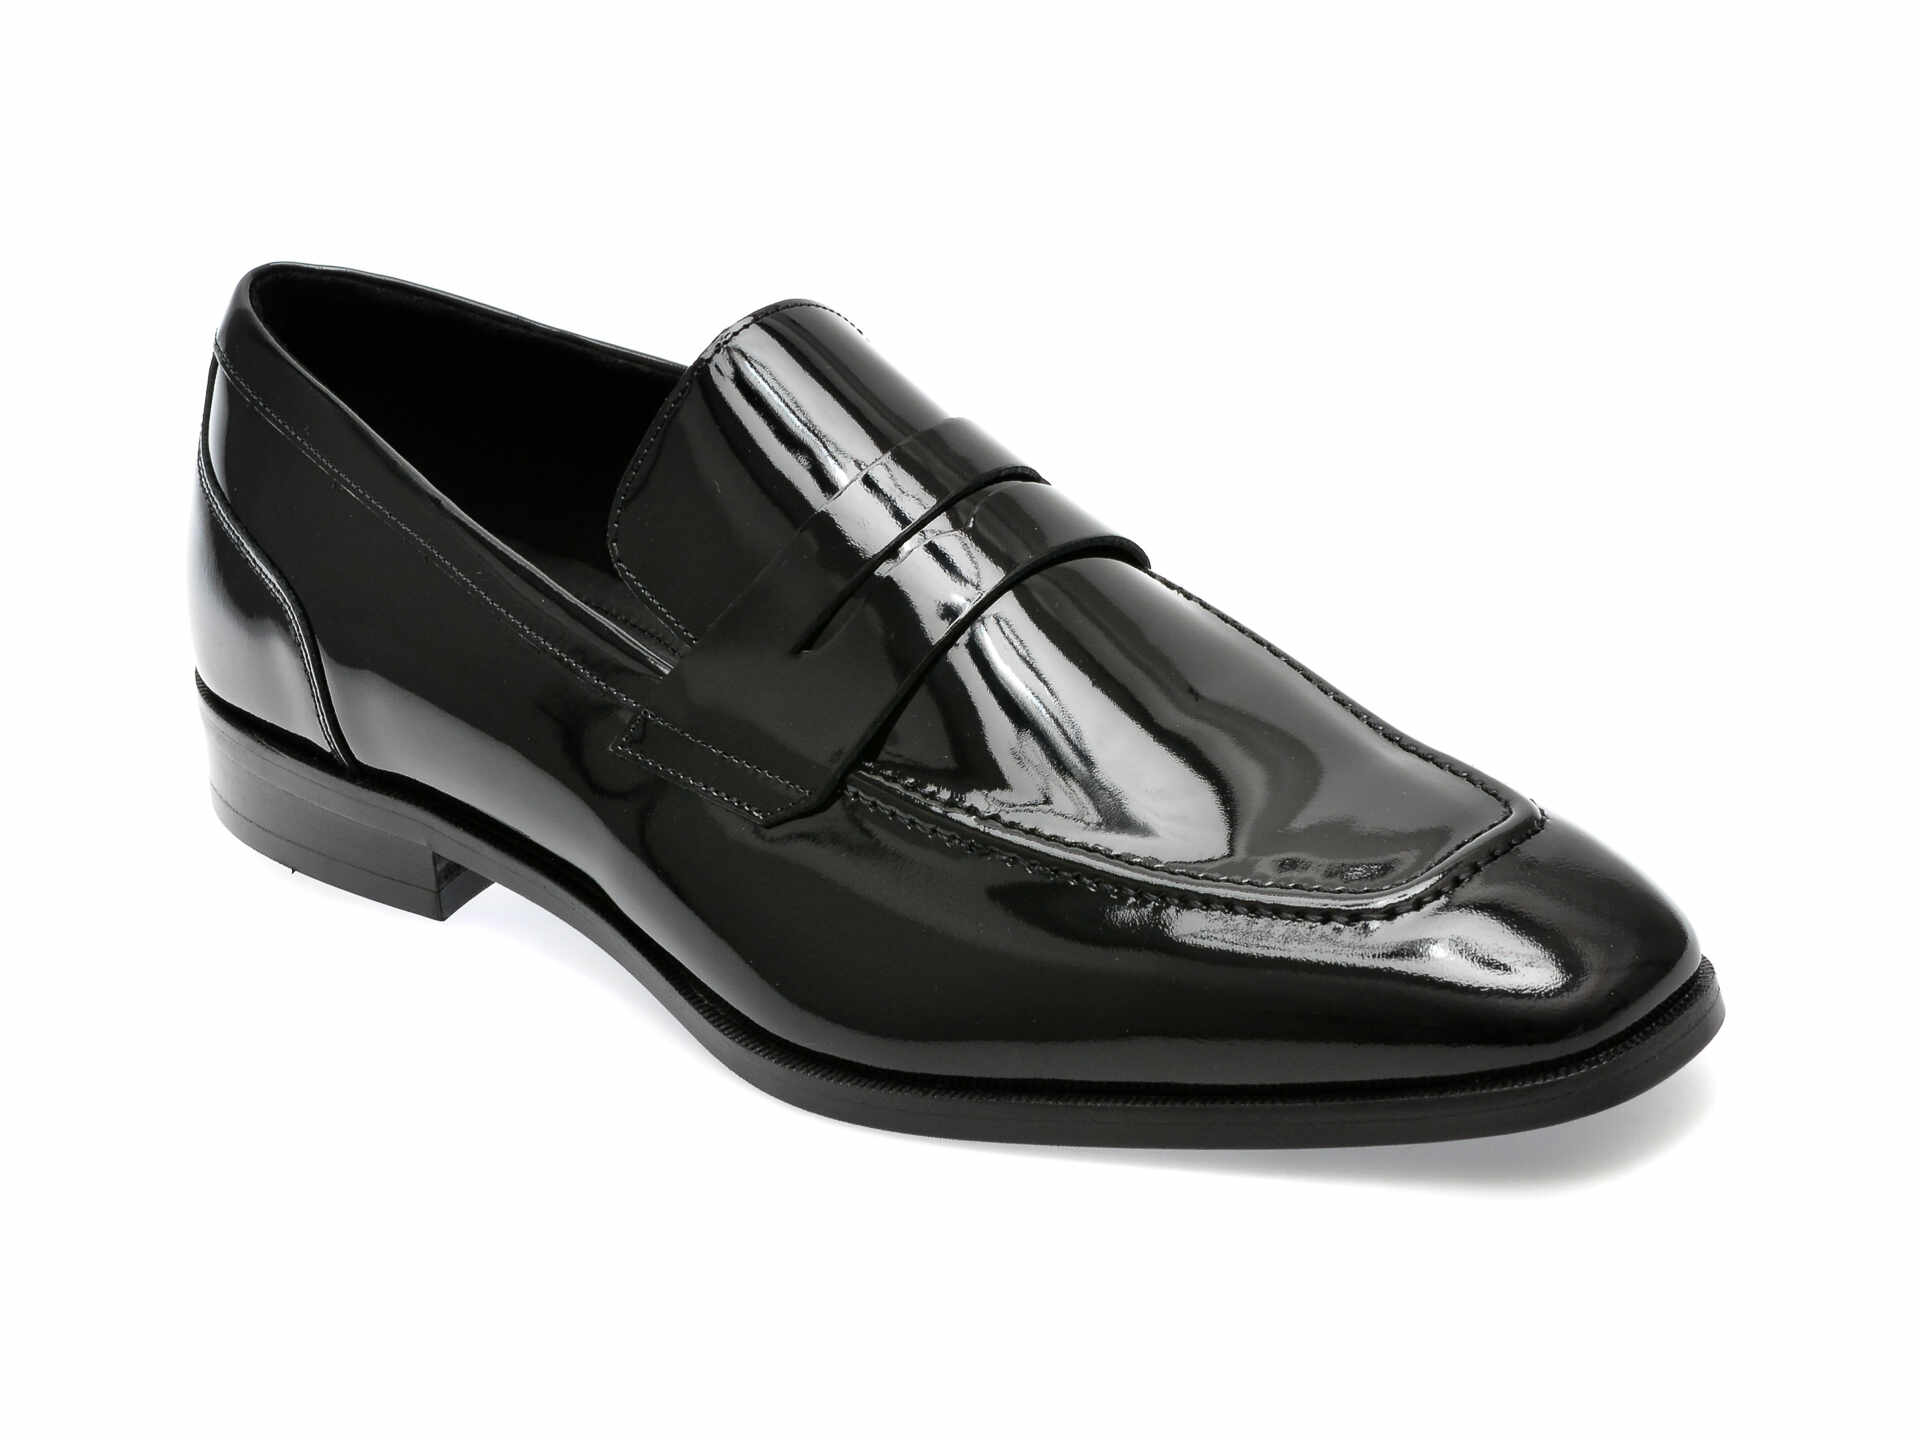 Pantofi eleganti ALDO negri, AALTO001, din piele naturala lacuita